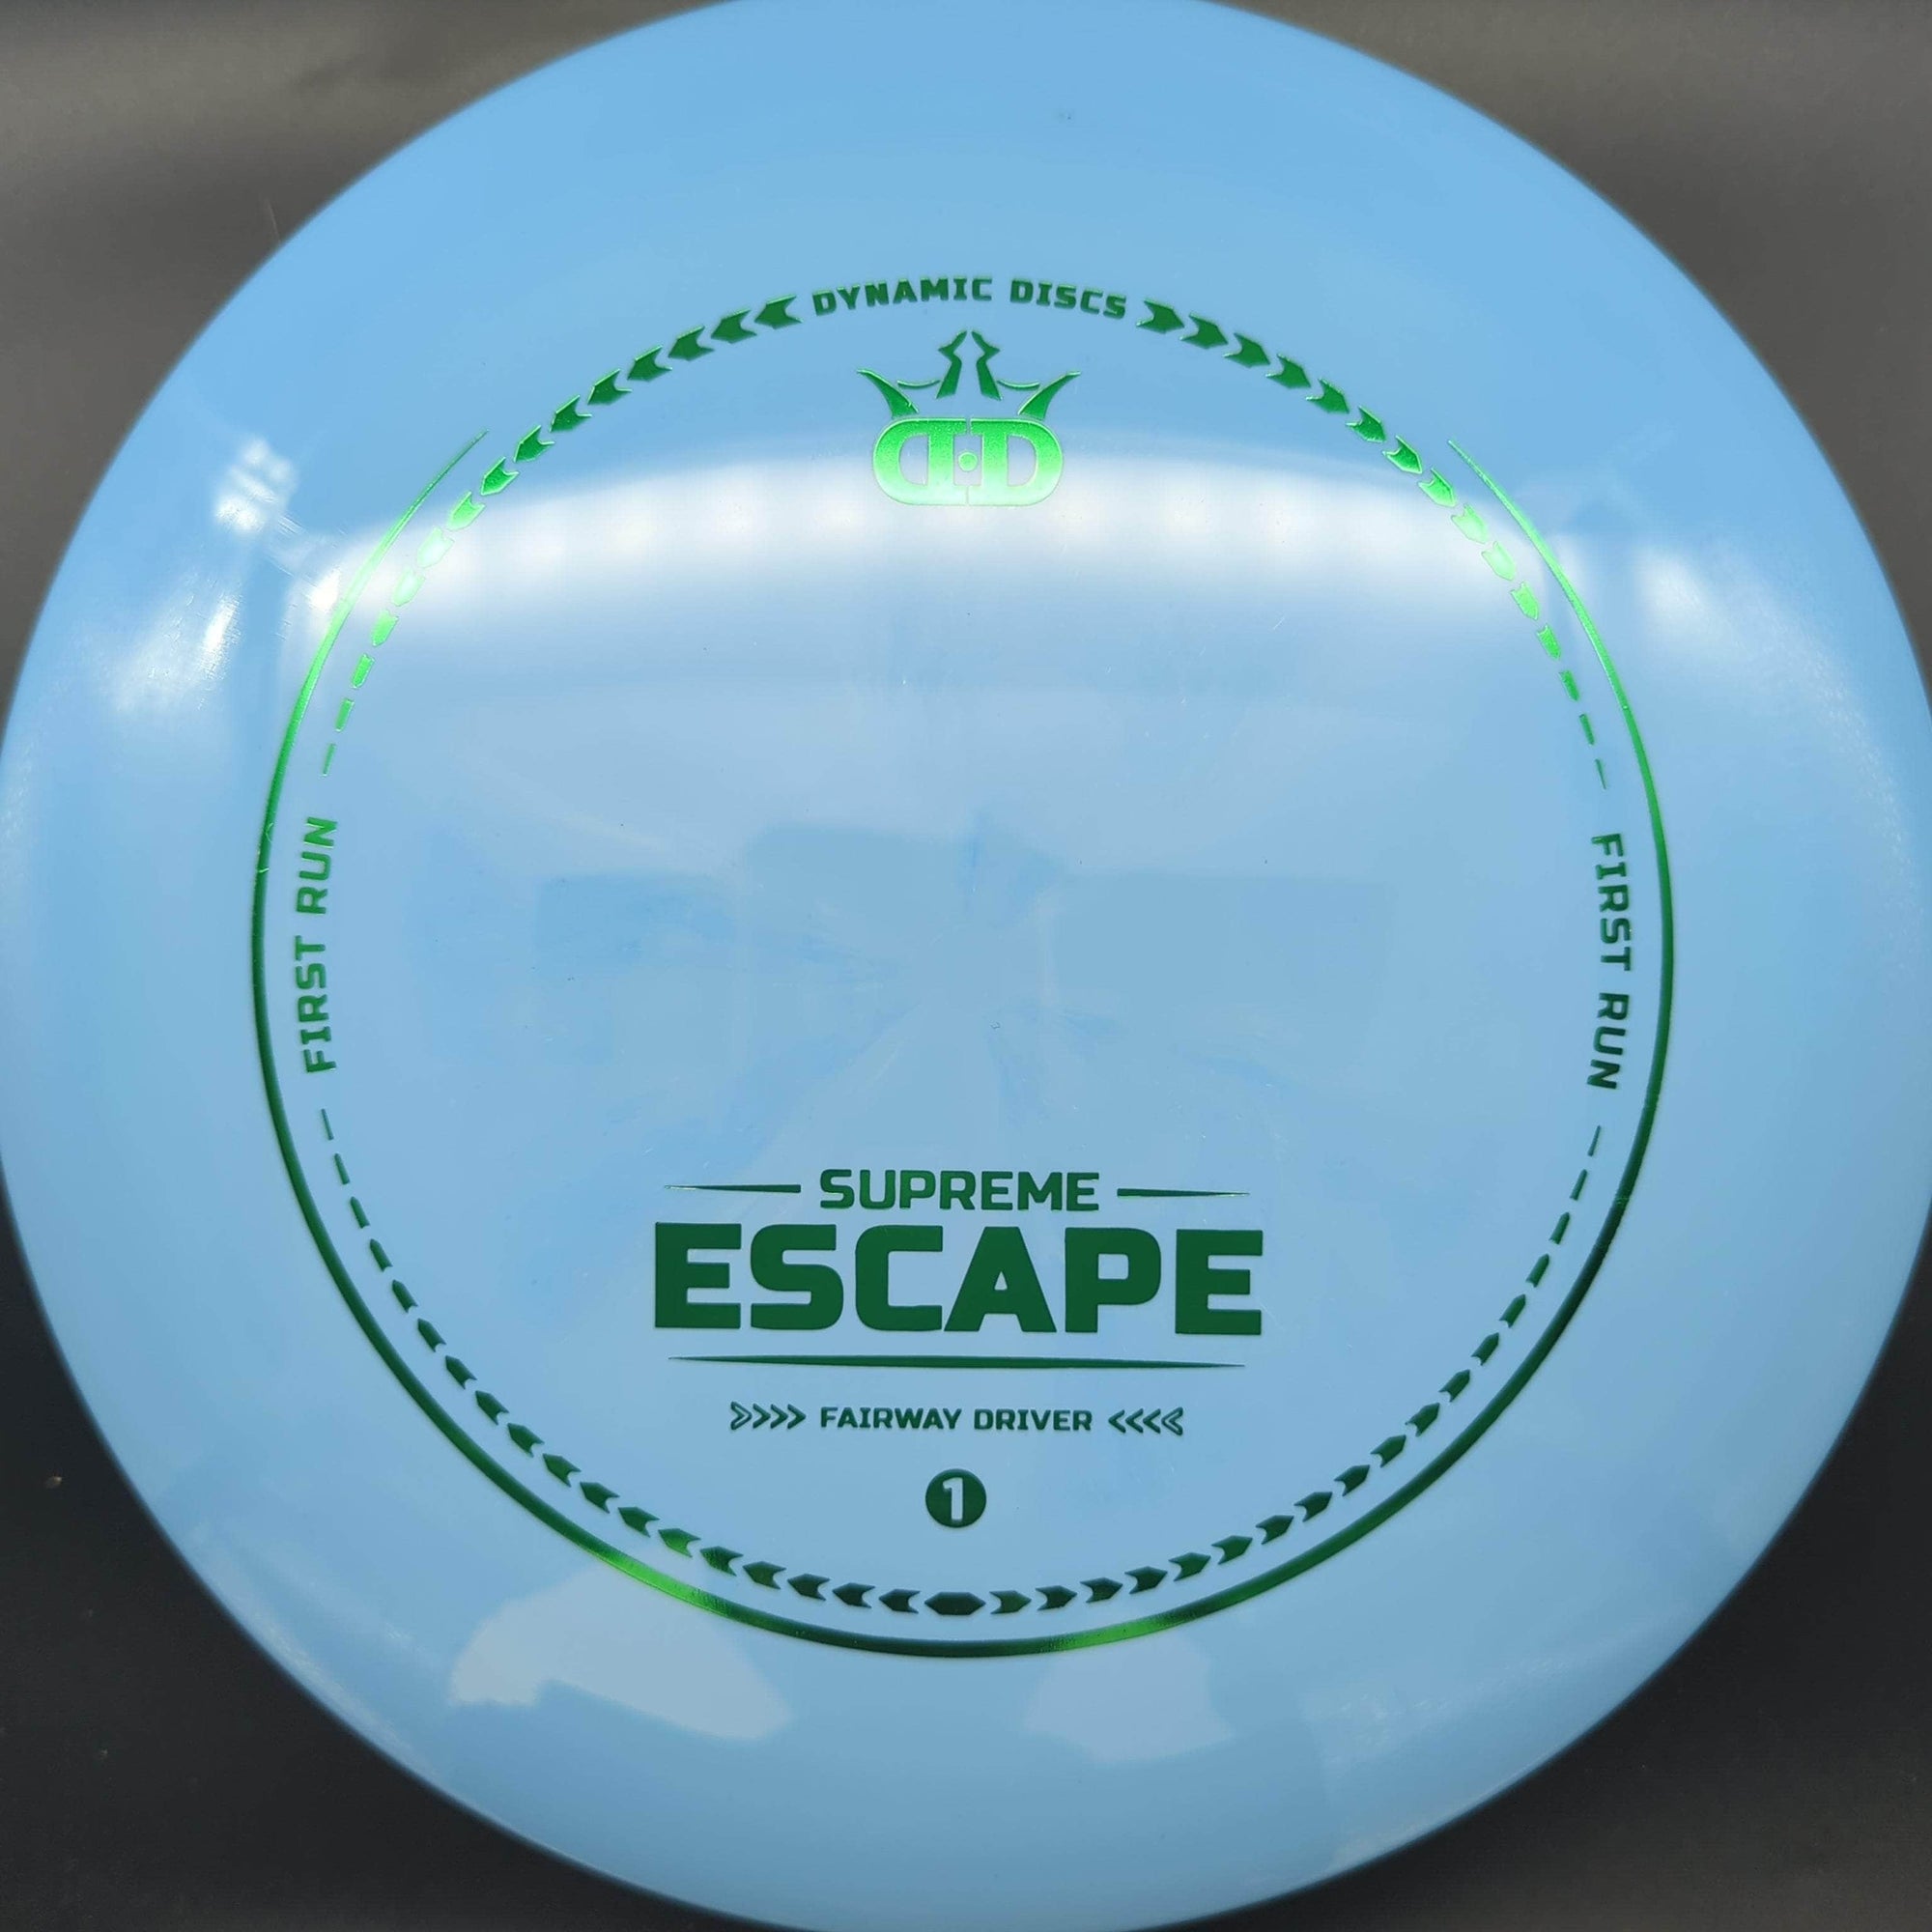 Dynamic Discs Fairway Driver Escape, Supreme Plastic, First Run